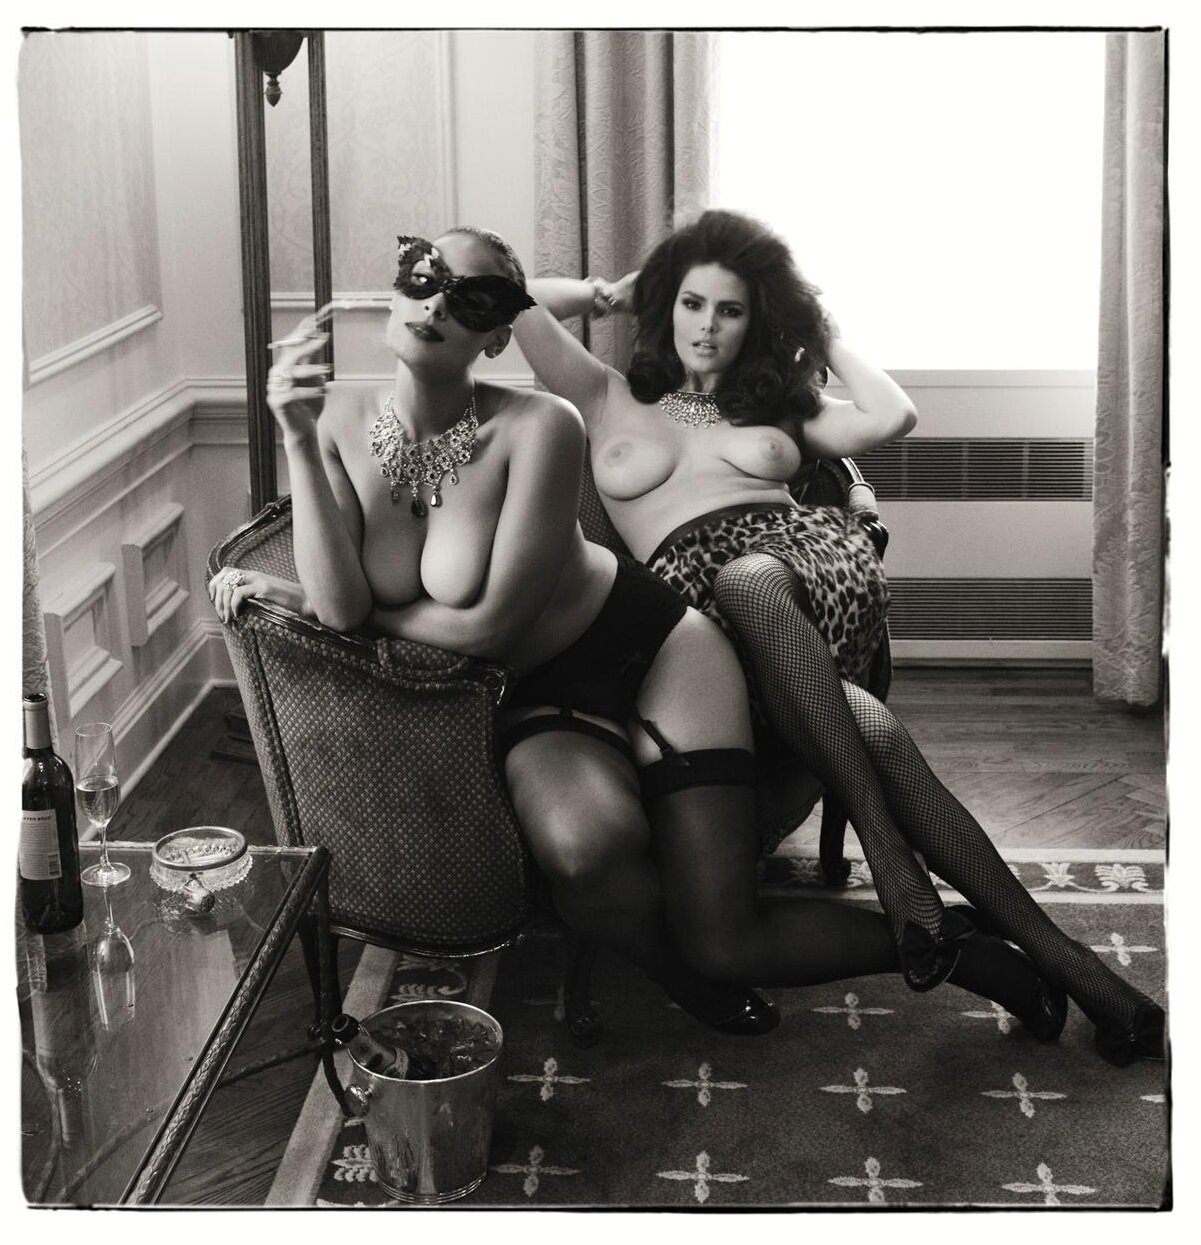 Steven Meisel, Edward Enninful 'Sogno Di Donna' for Vogue Italia June 2011 (15).jpg